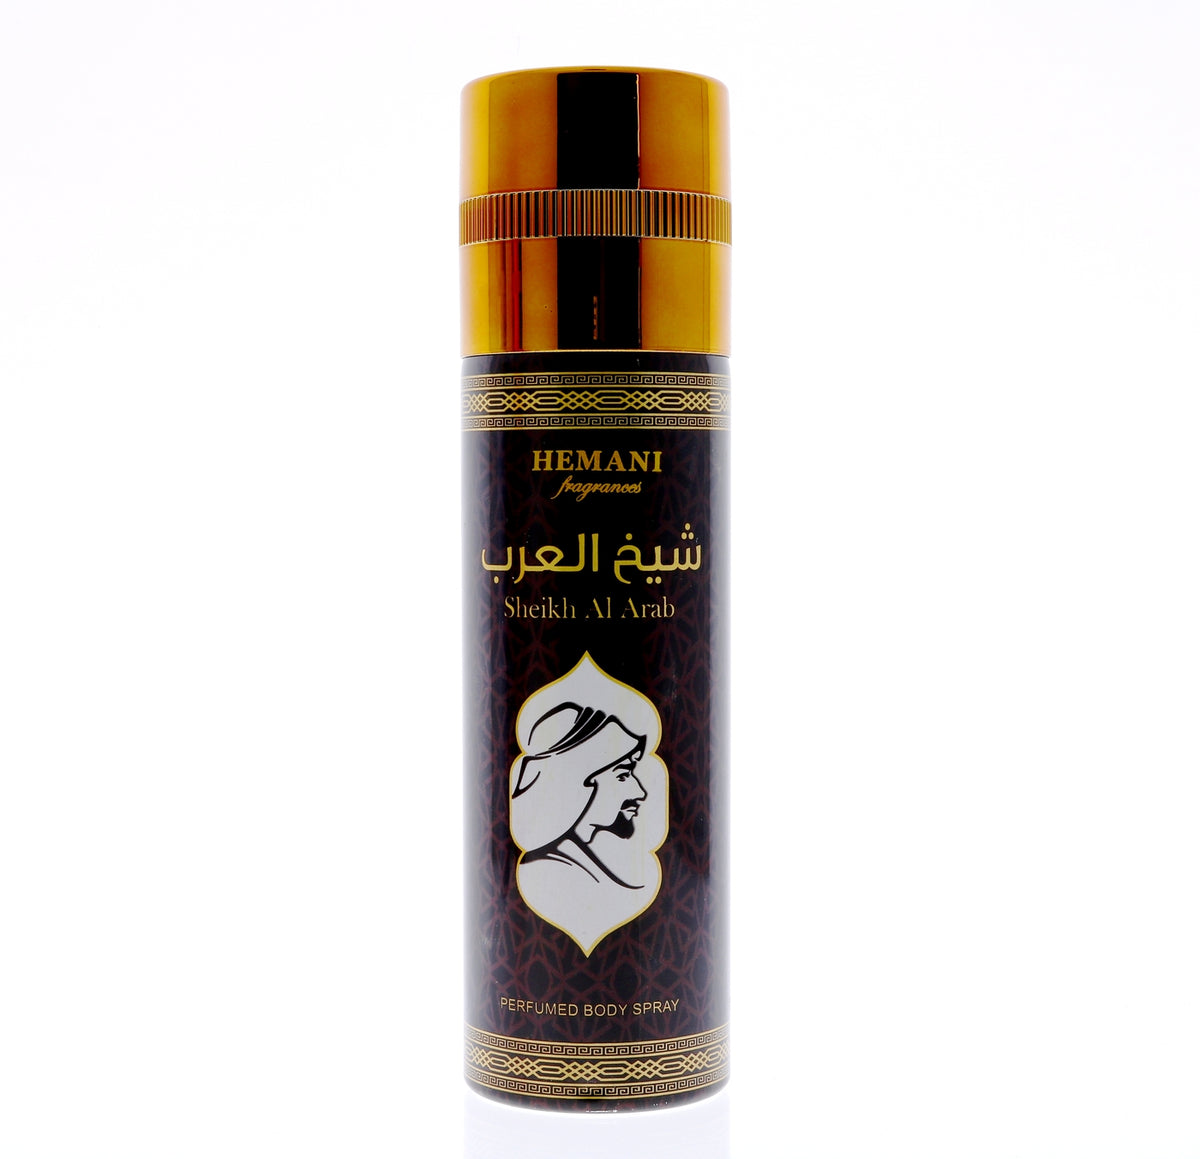 hemani-shiekh-al-arab-deodorant-spray-200ml-7-oz-for-men-1